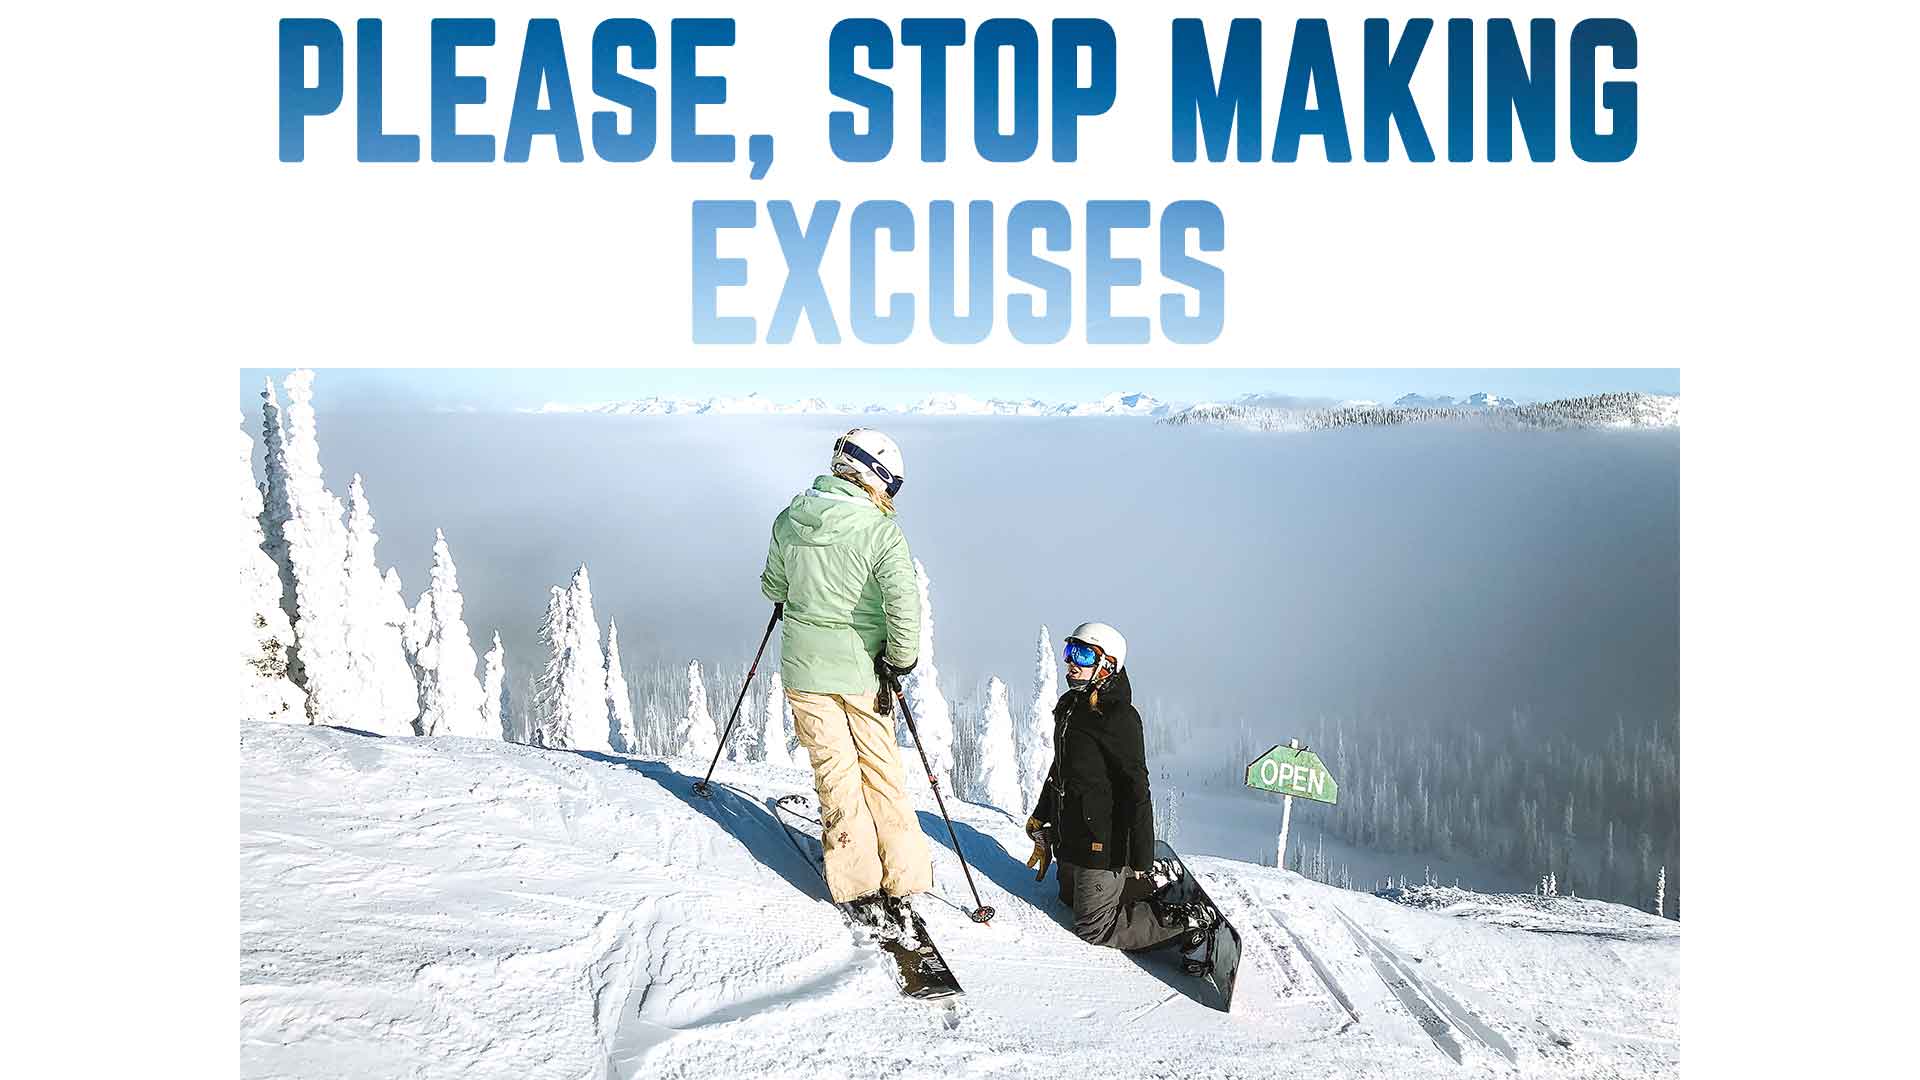 please-stop-making-excuses-motivational-quote-ski-ice-mountains-snow